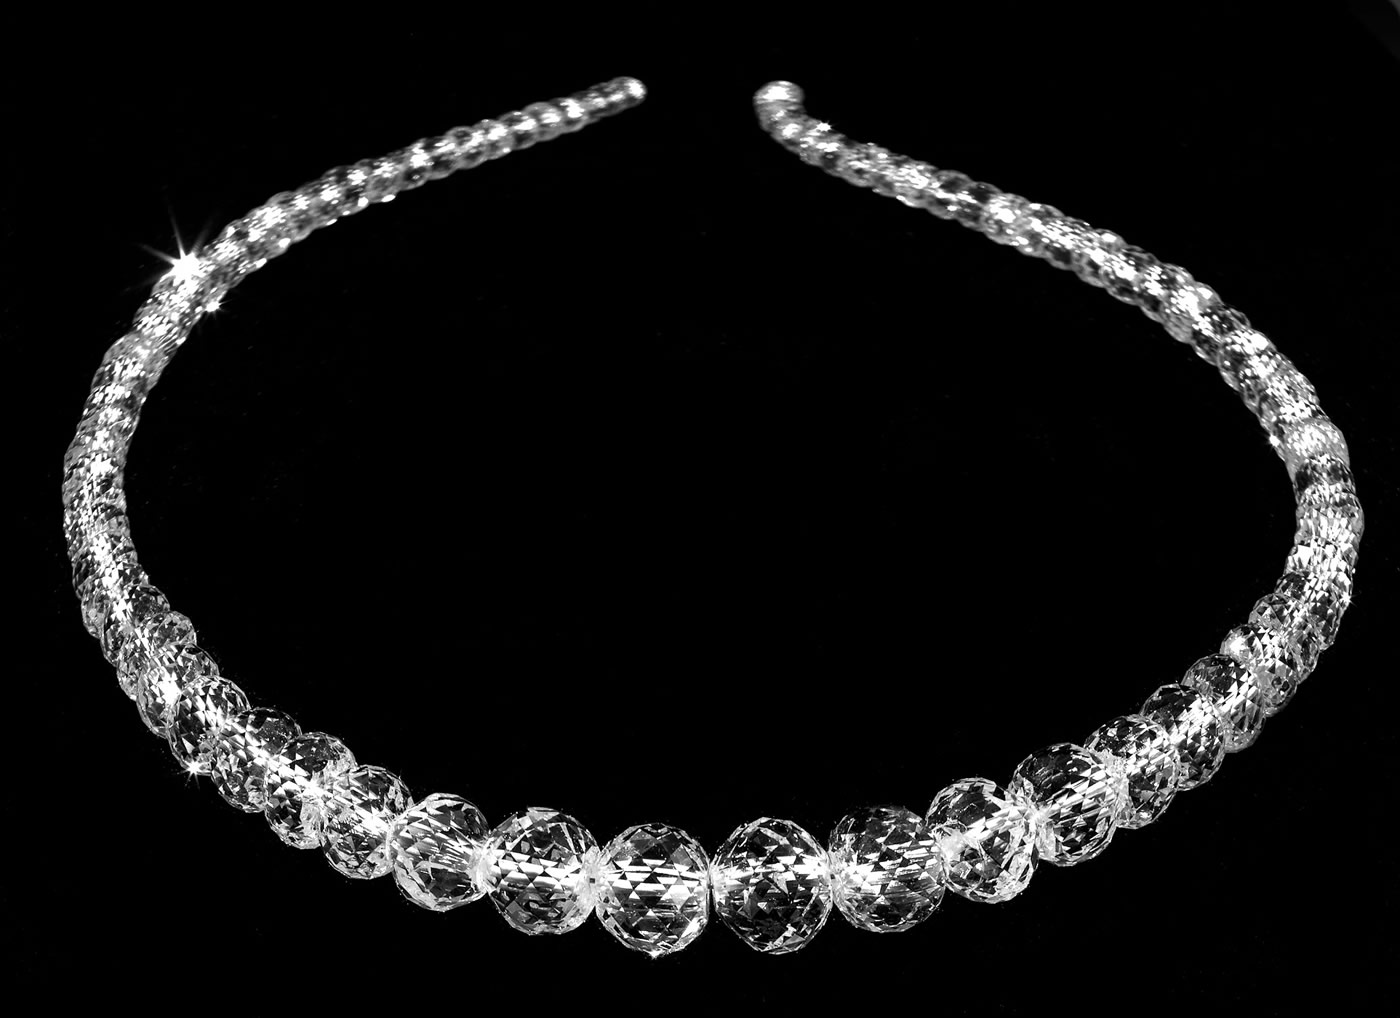 Manak jewels: Diamond Beads, Diamond Briolettes, Beads, Briolettes